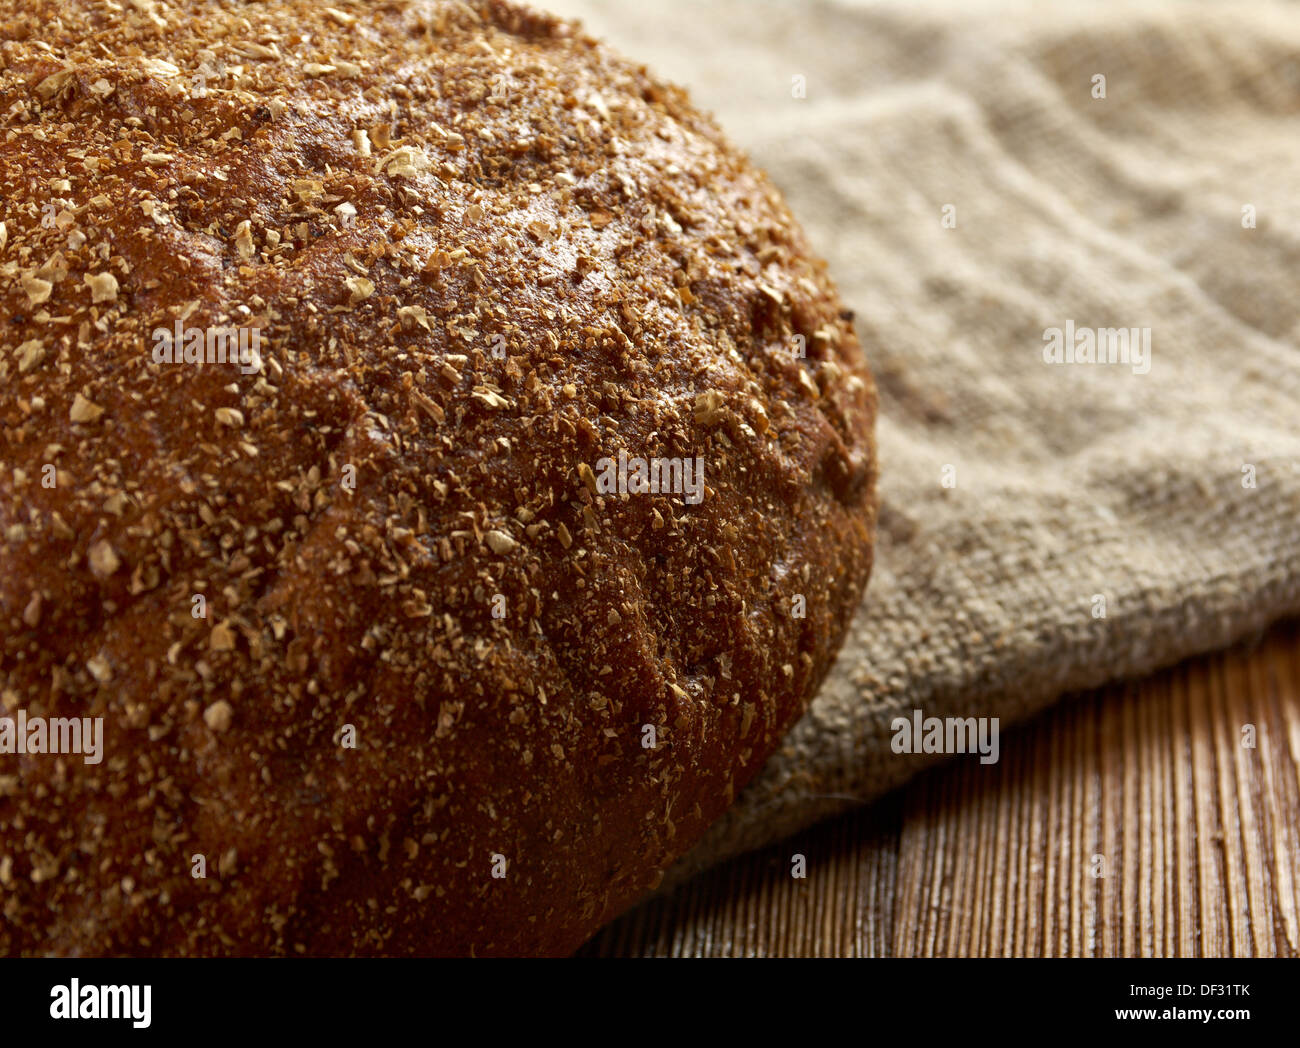 farmhouse bread .farm-style country Stock Photo